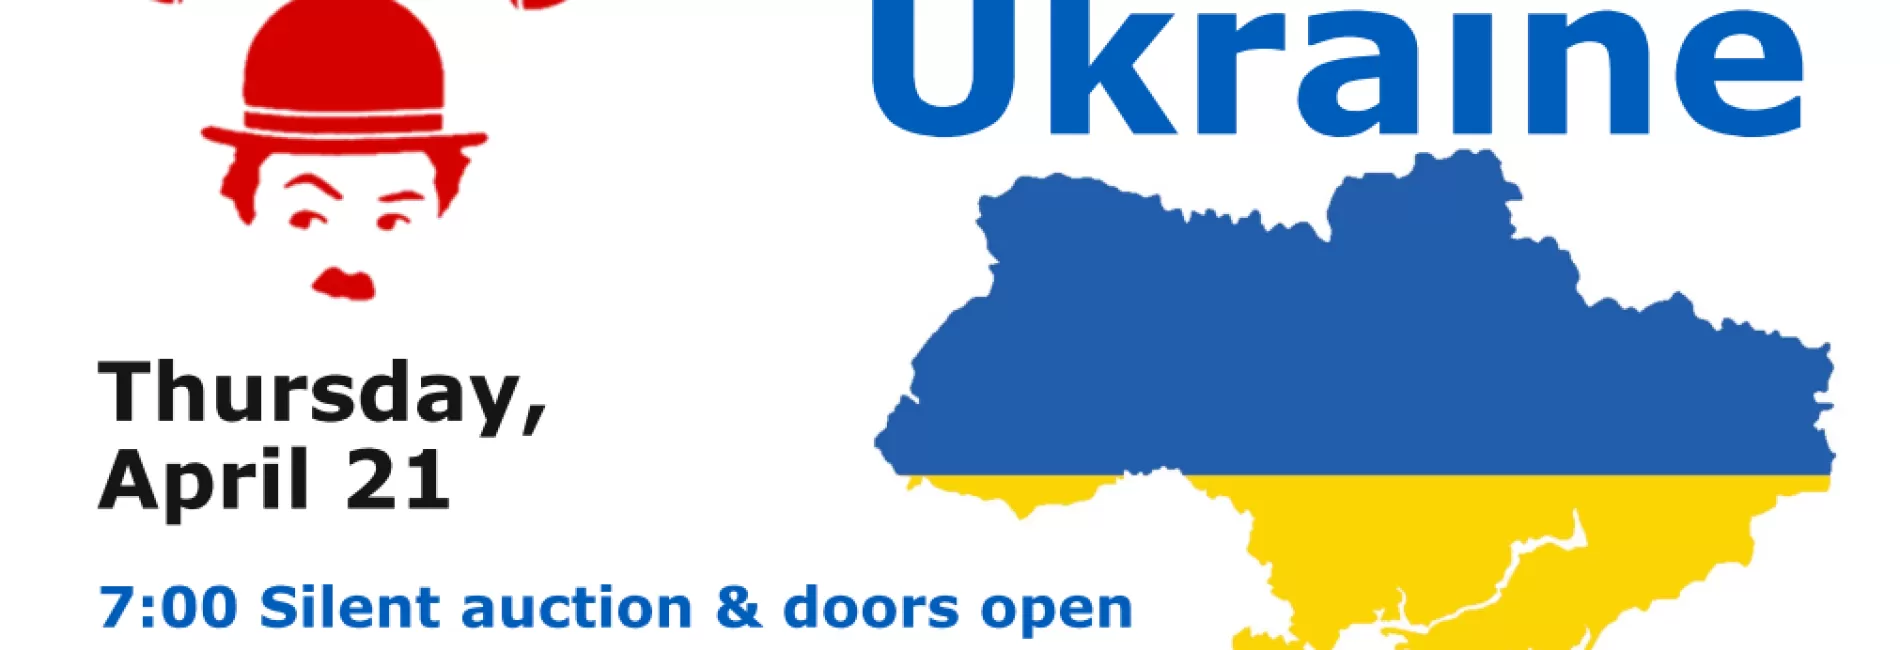 Fundraise for Ukraine